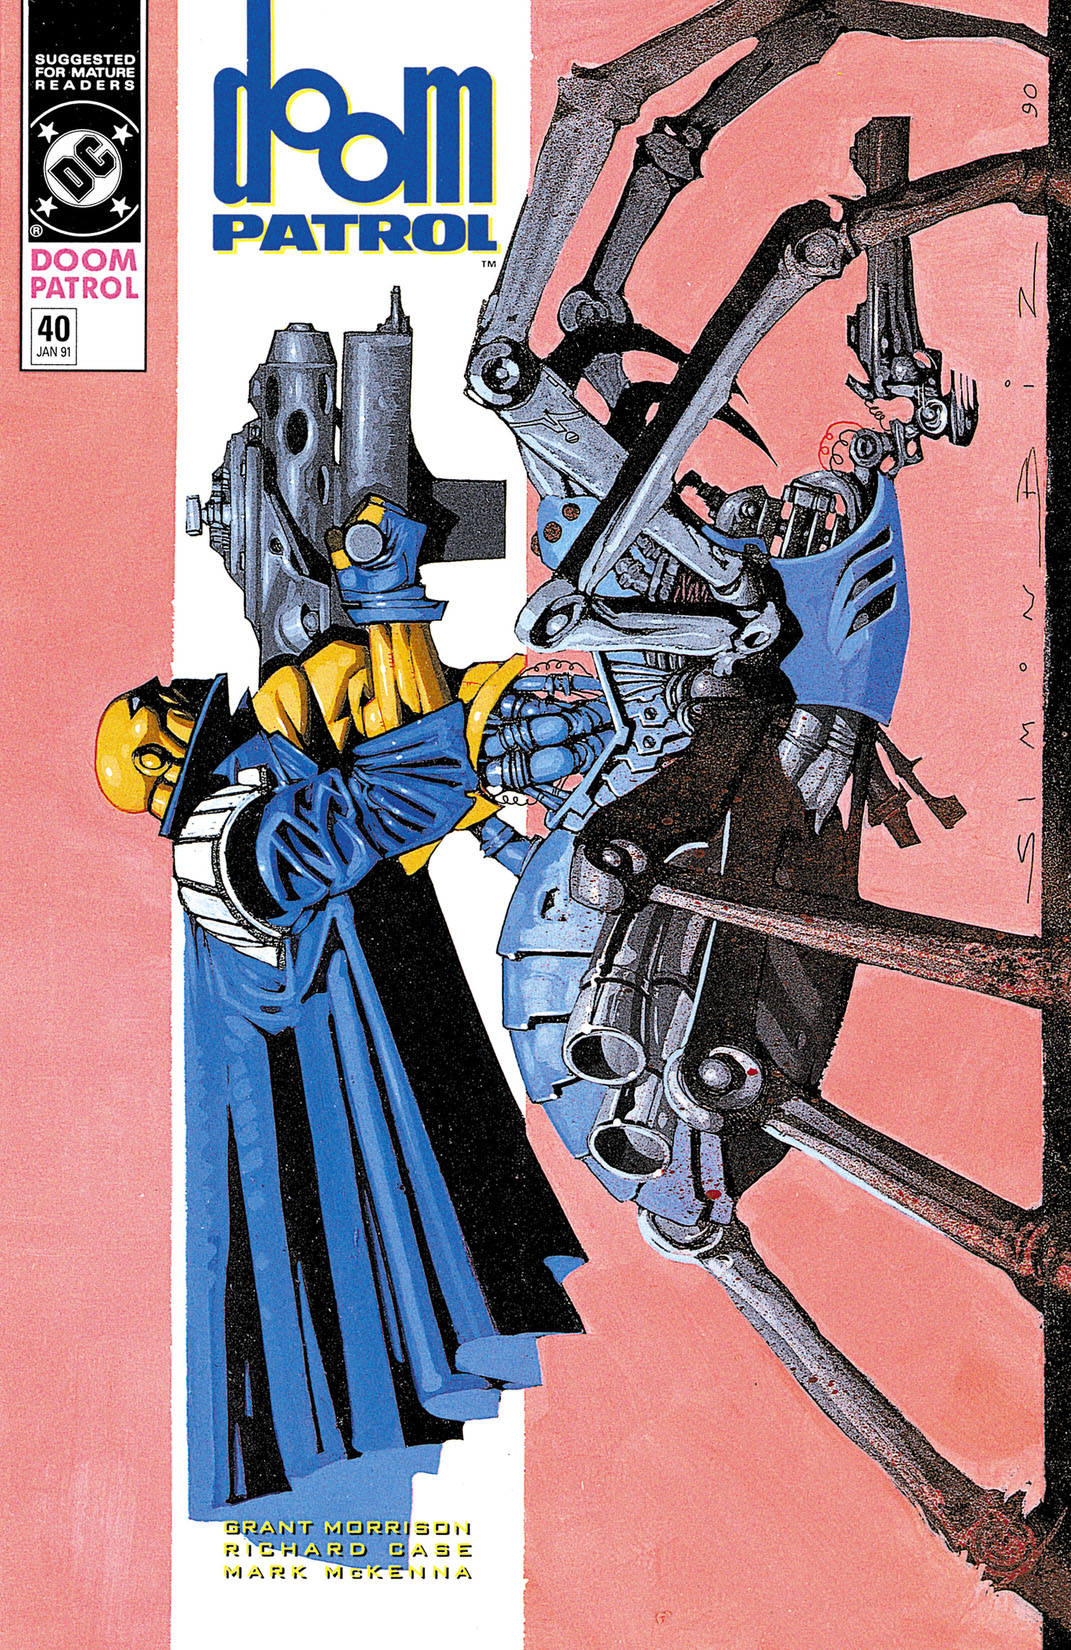 Doom Patrol (1987-) #40 preview images